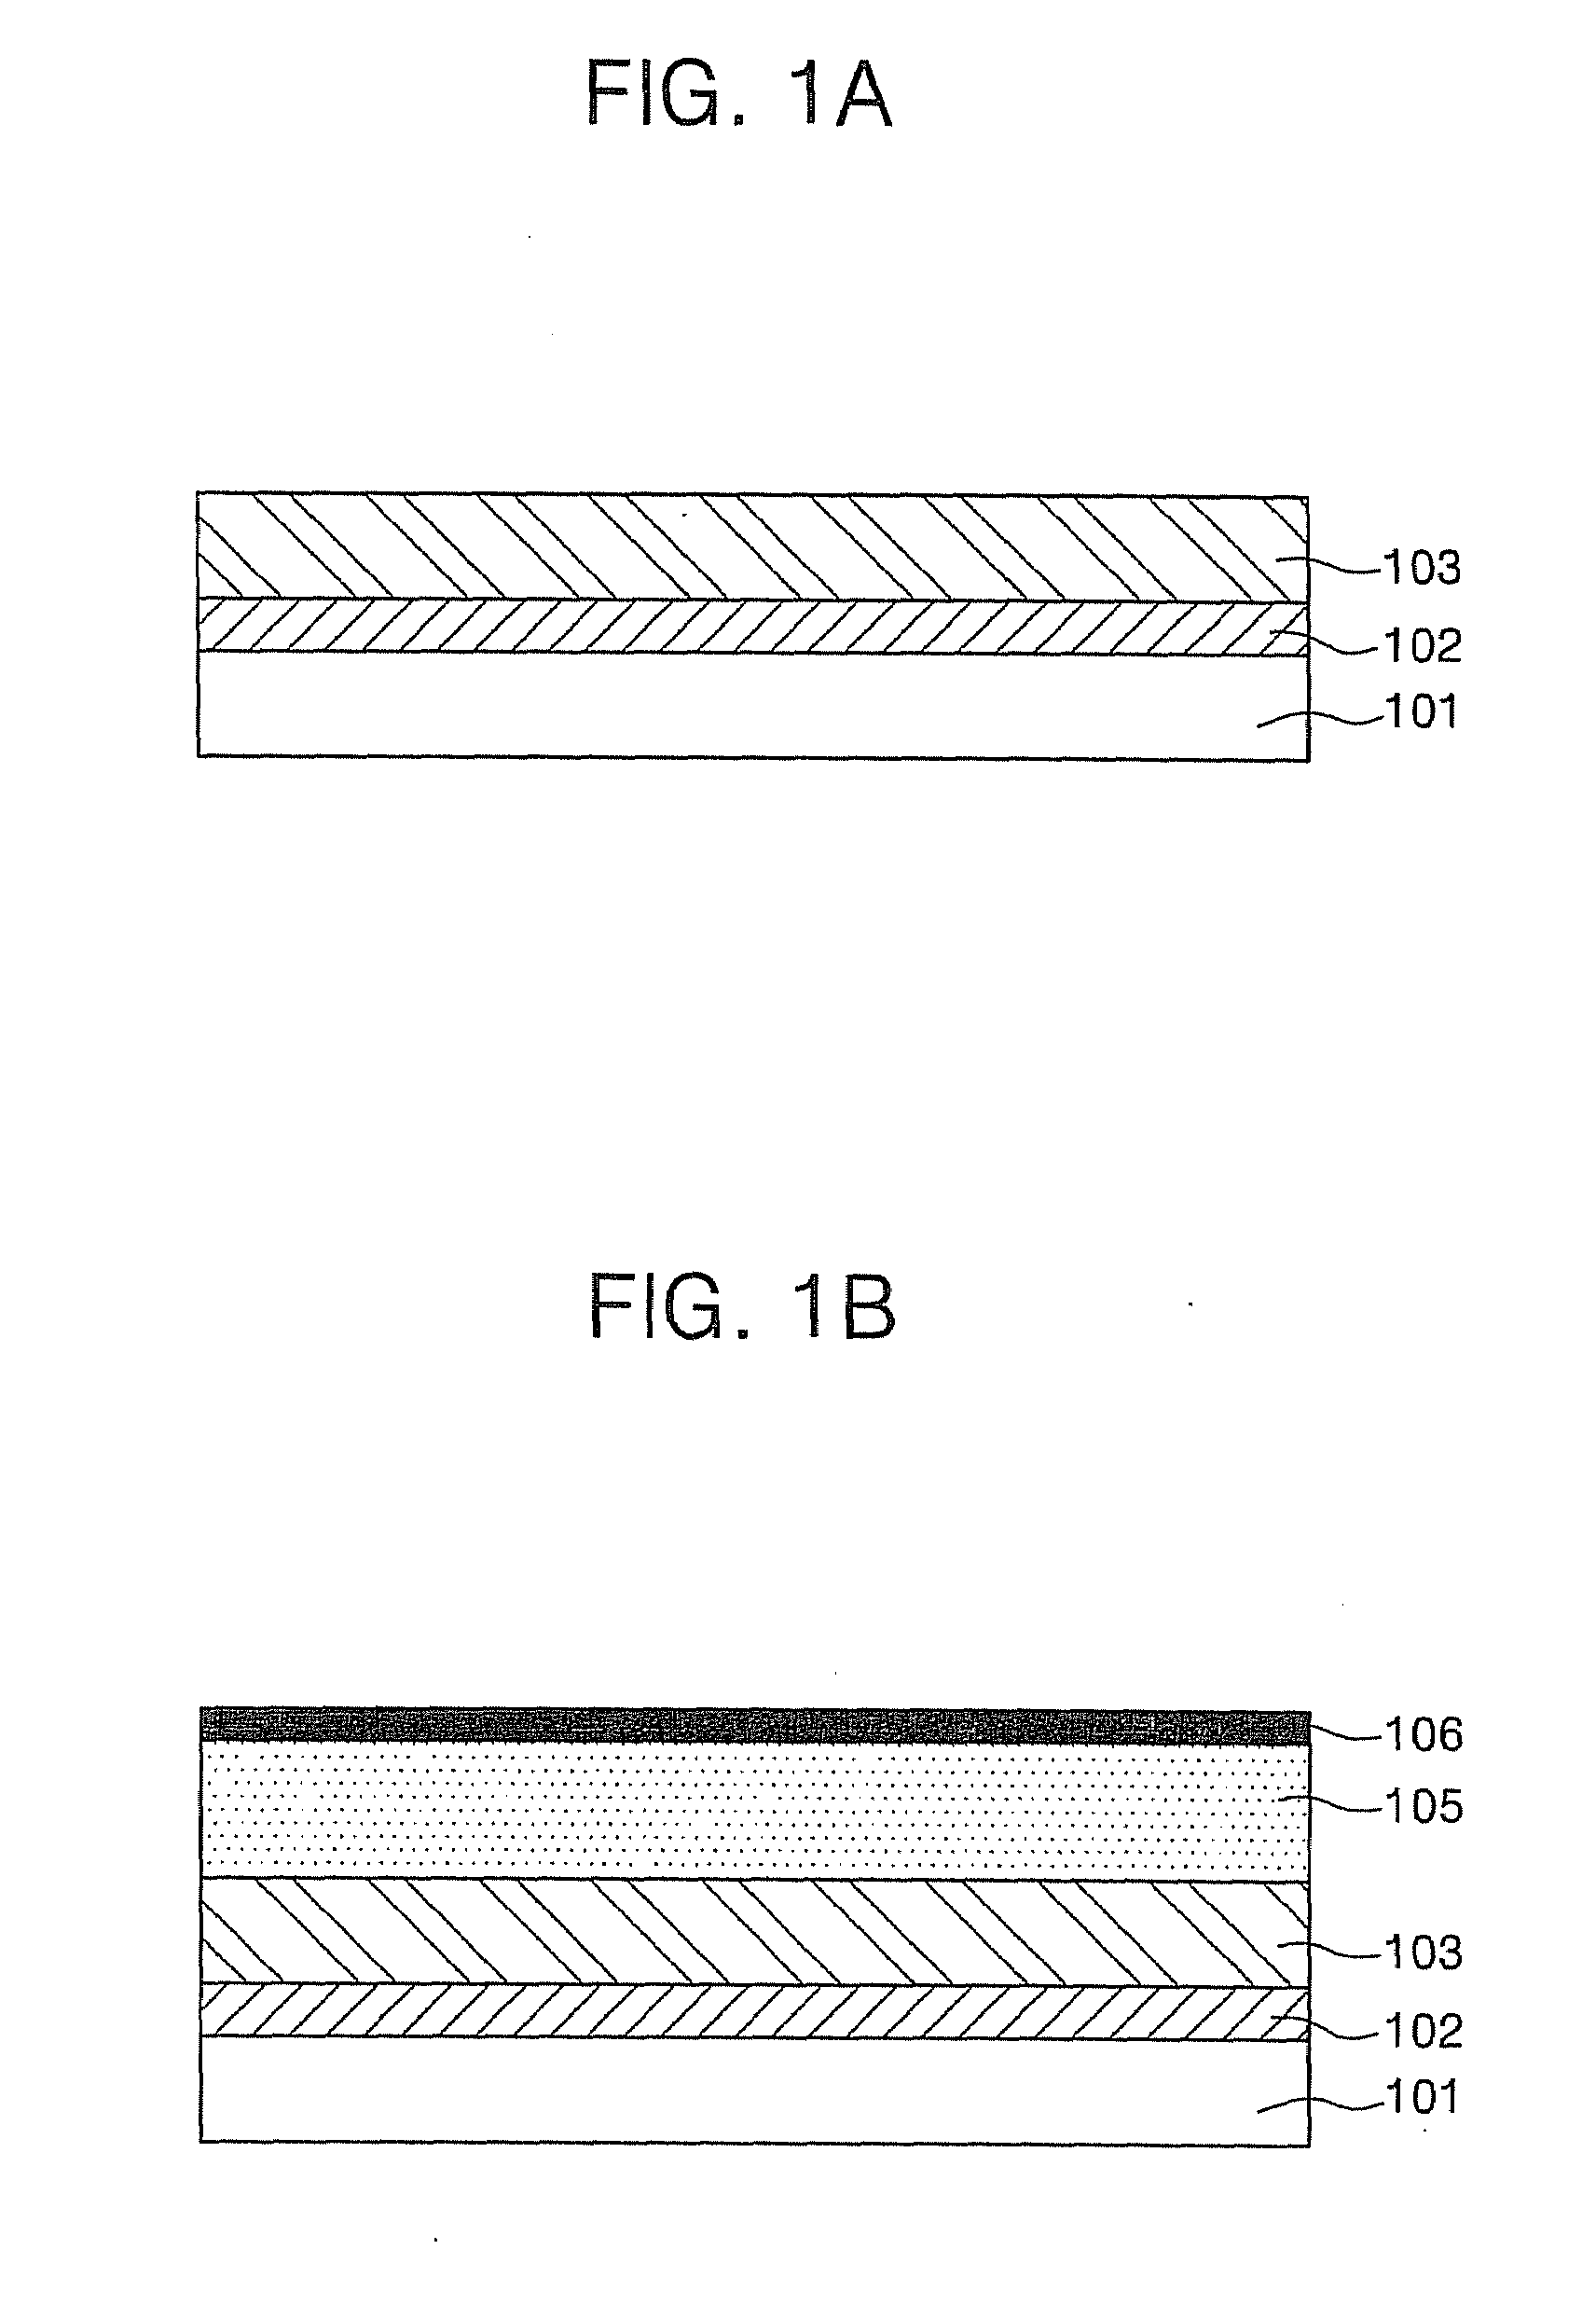 Method of fabricating pmos thin film transistor